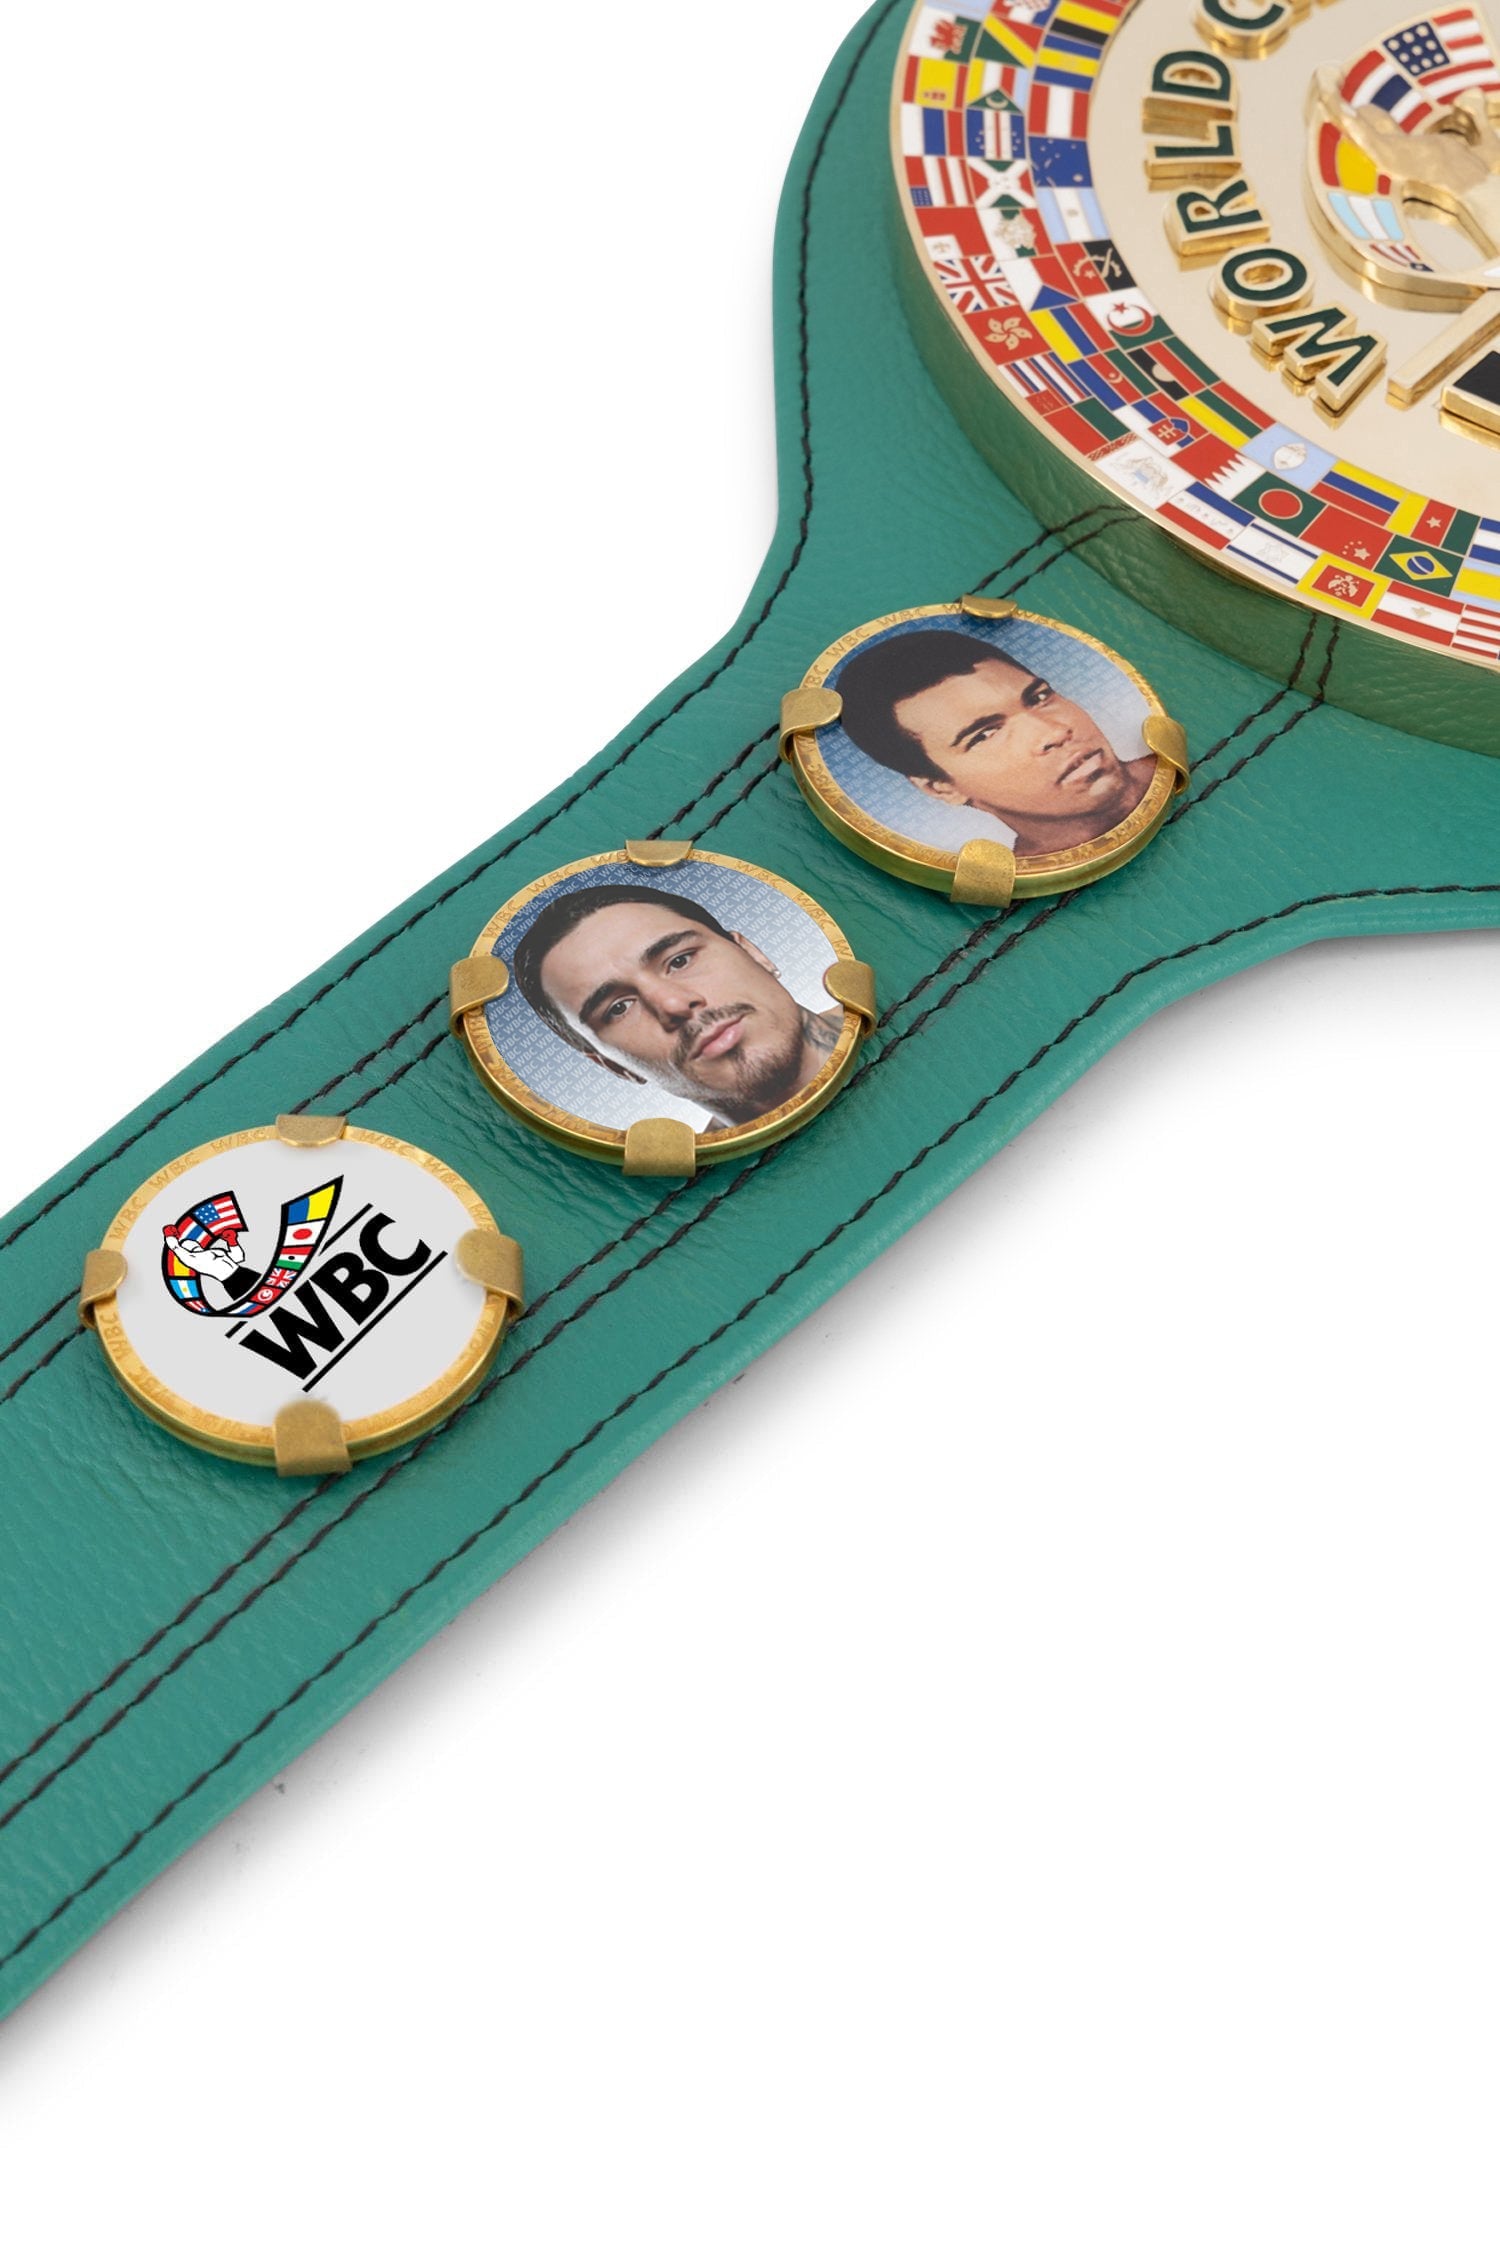 WBC Store WBC Championship Replica Belt George Kambosos Jr. vs. Devin Haney